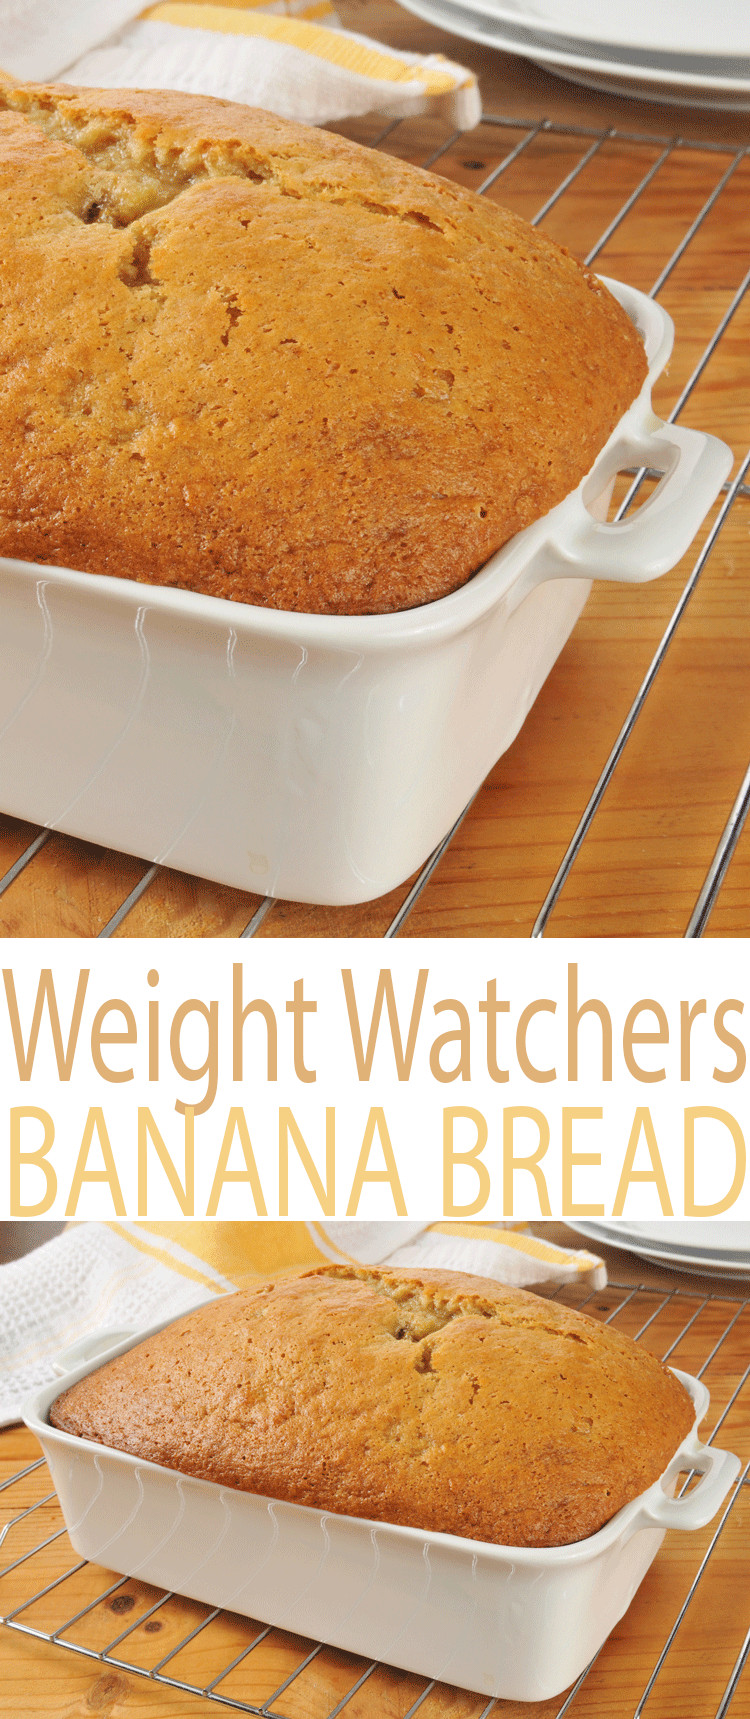 Weight Watchers Banana Recipes
 Weight Watchers Banana Bread Recipe